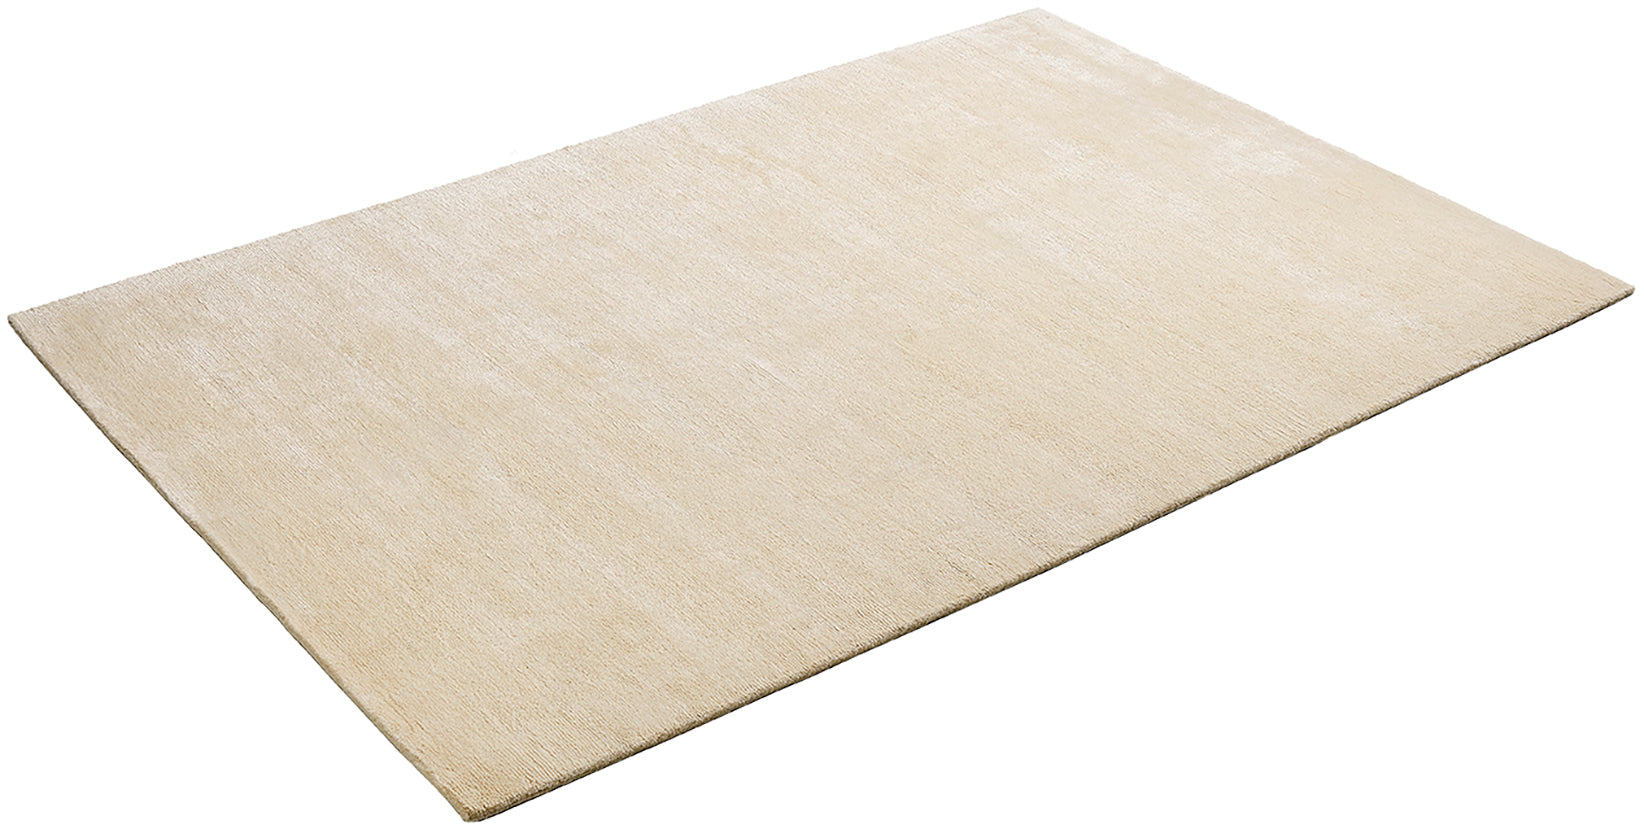 large plain beige rug
